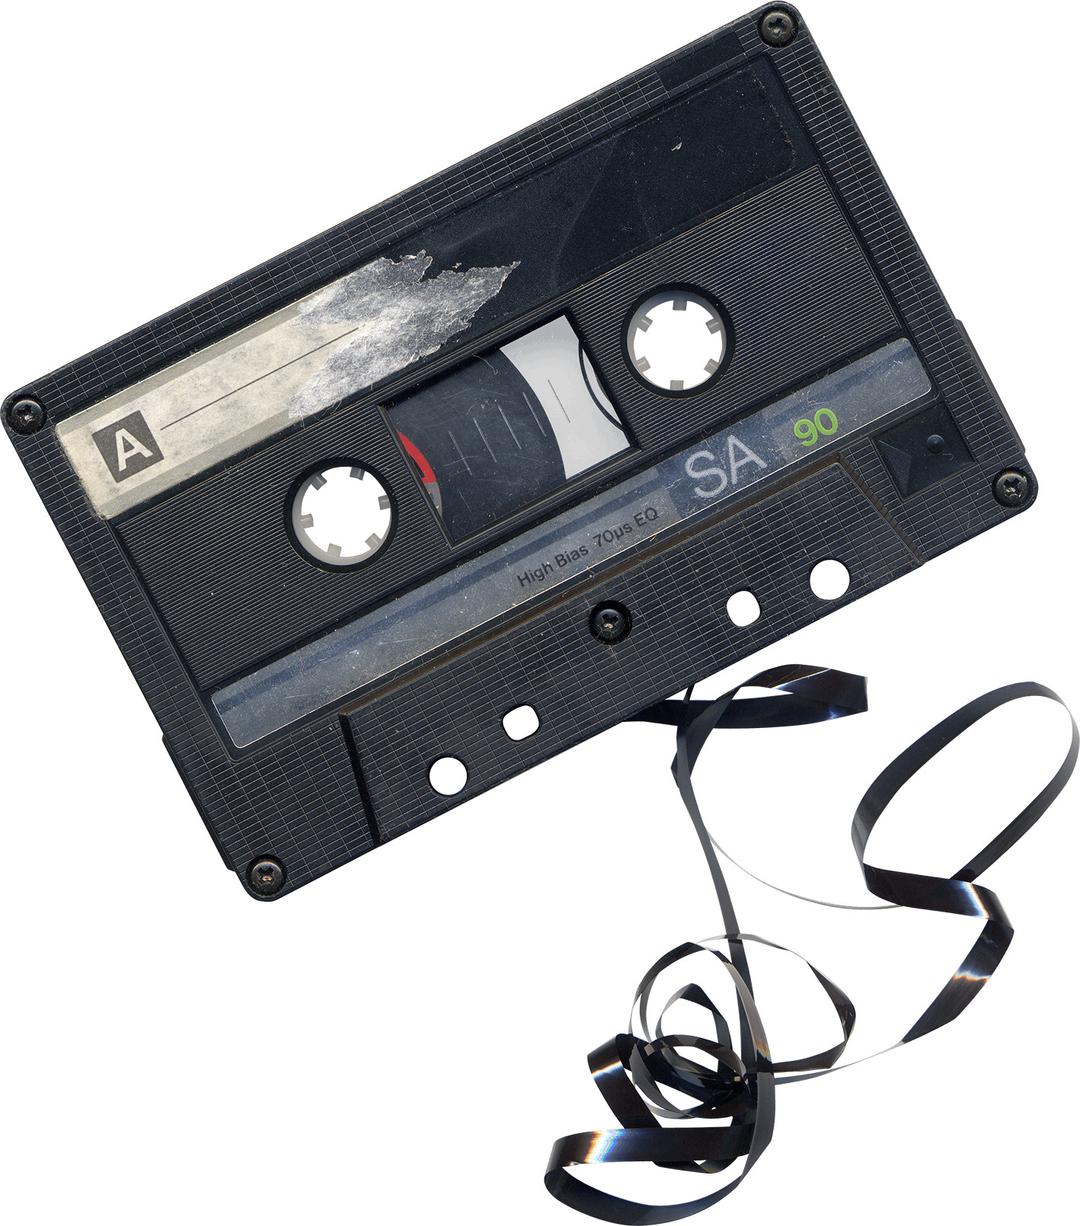 Damaged Audio Cassette png transparent